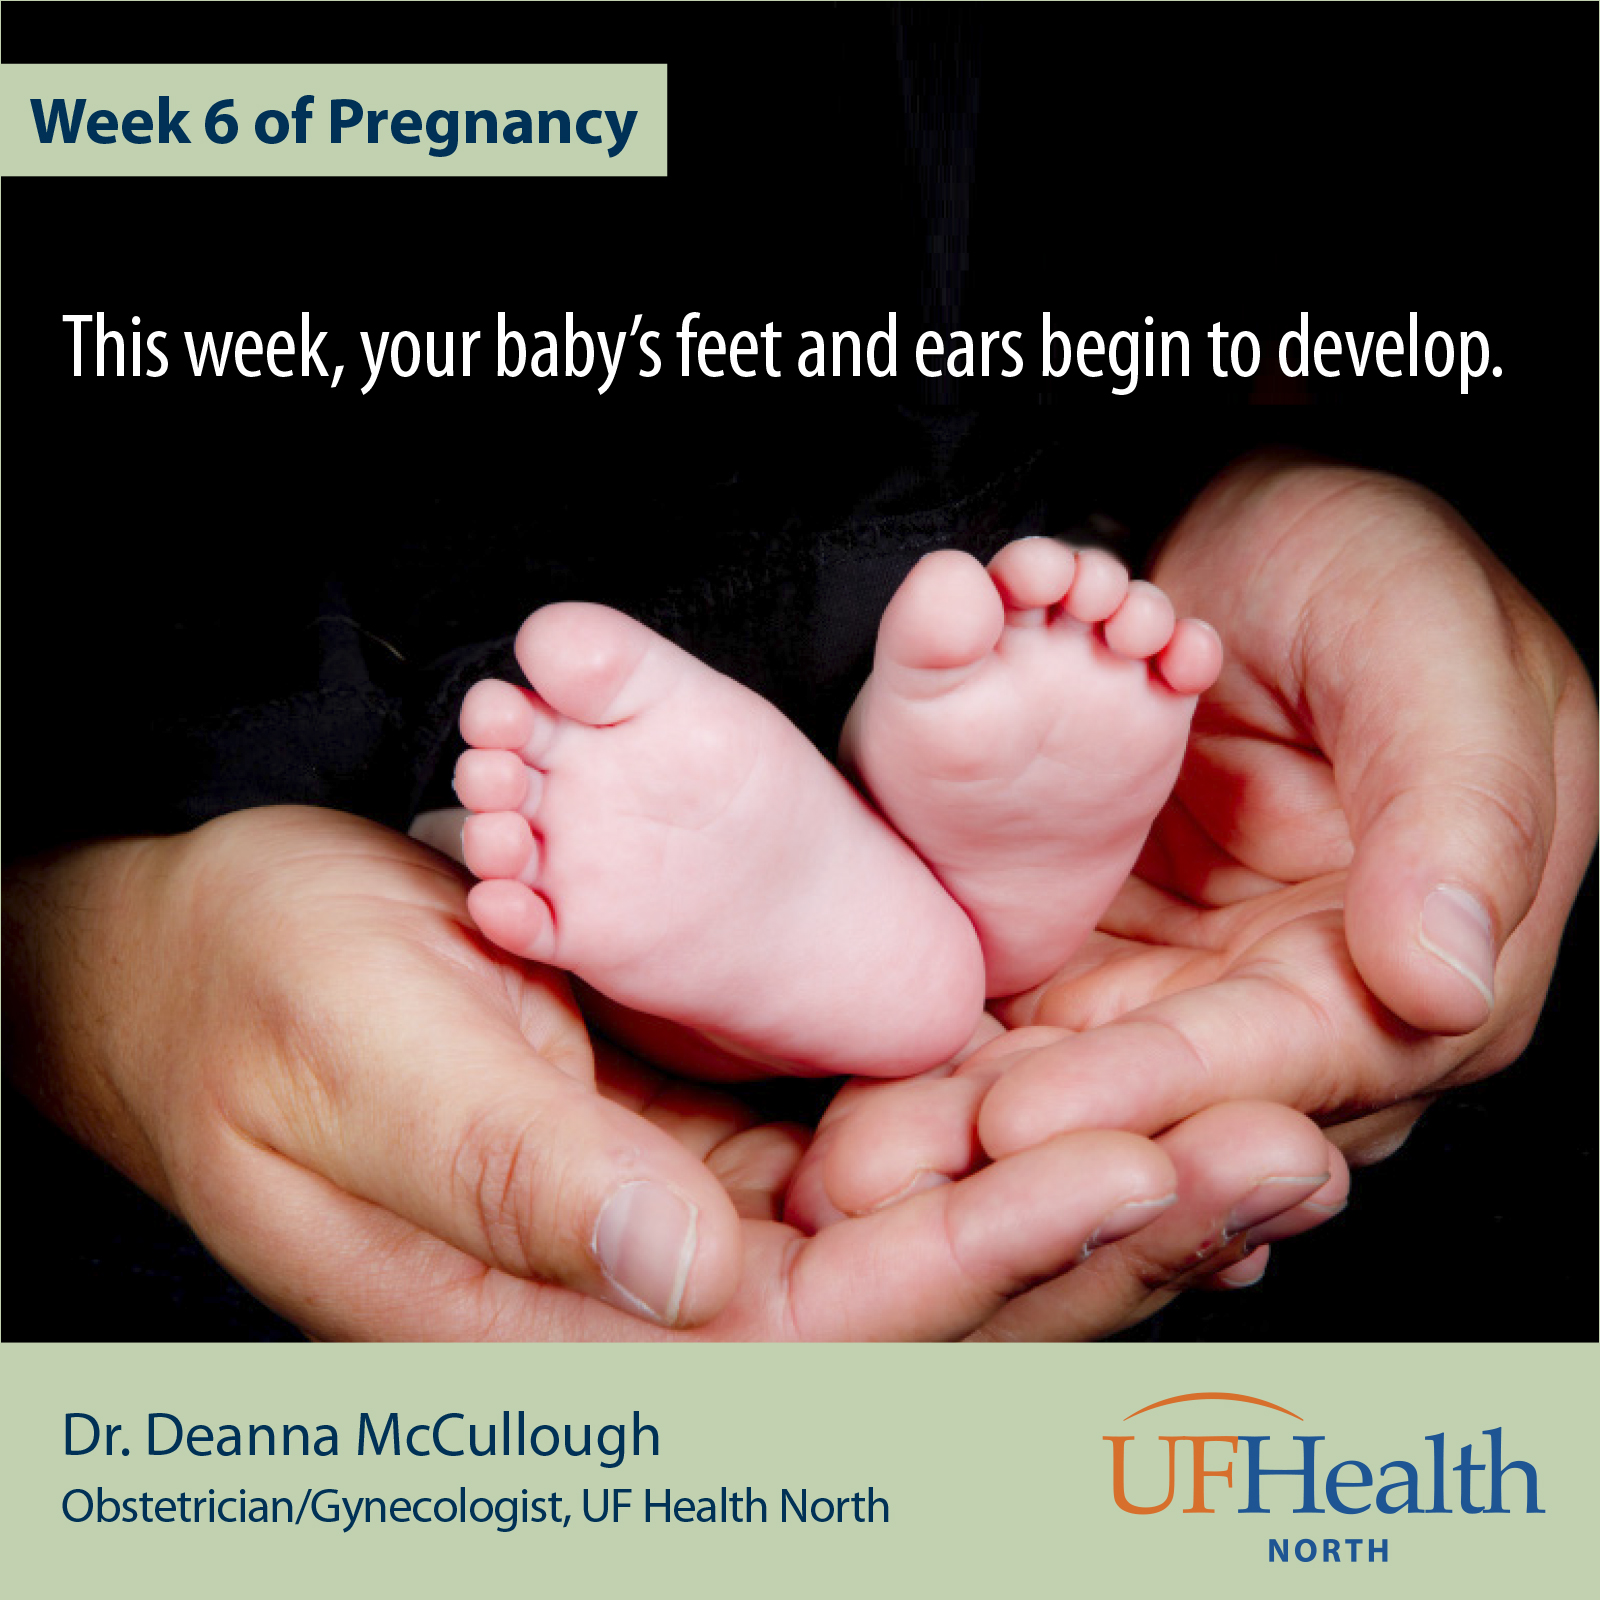 UF Health North pregnancy tip 6